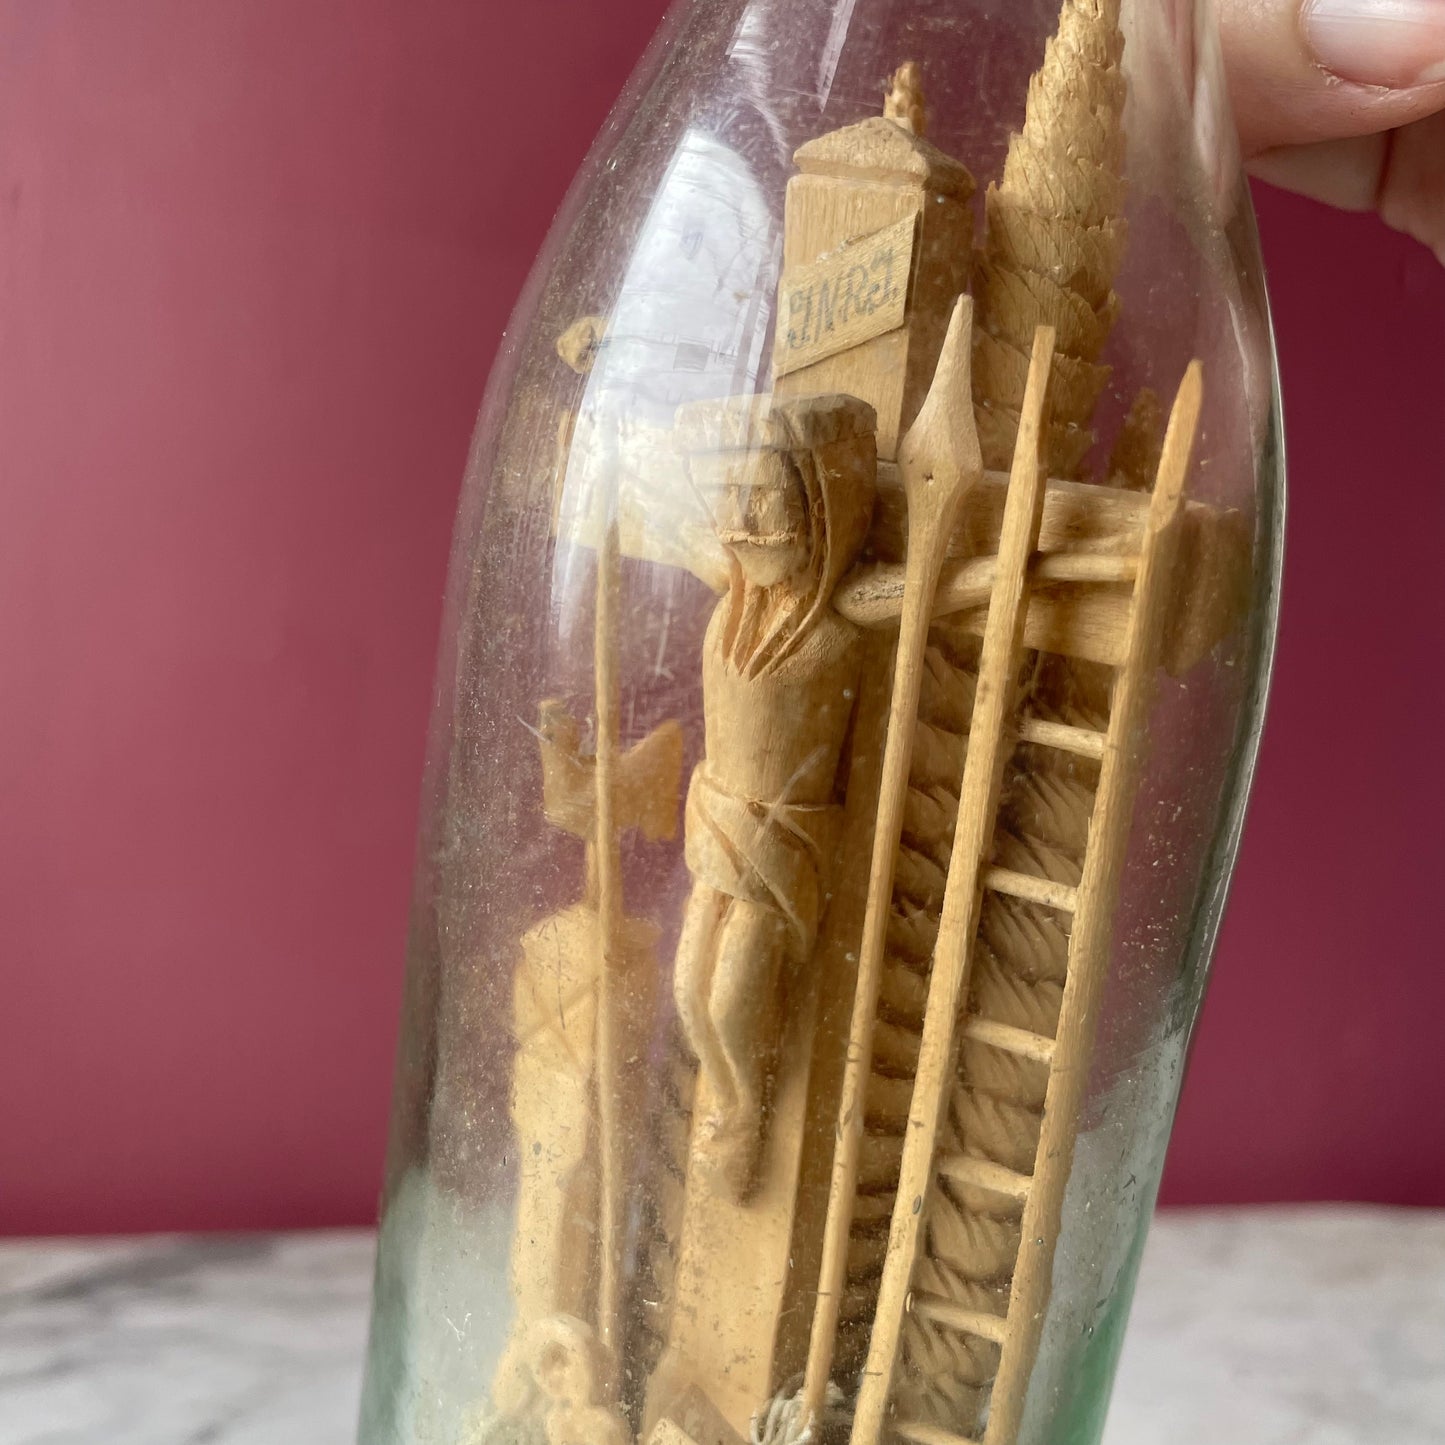 Antique Folk Art Bottle Assemblage | Arma Christi